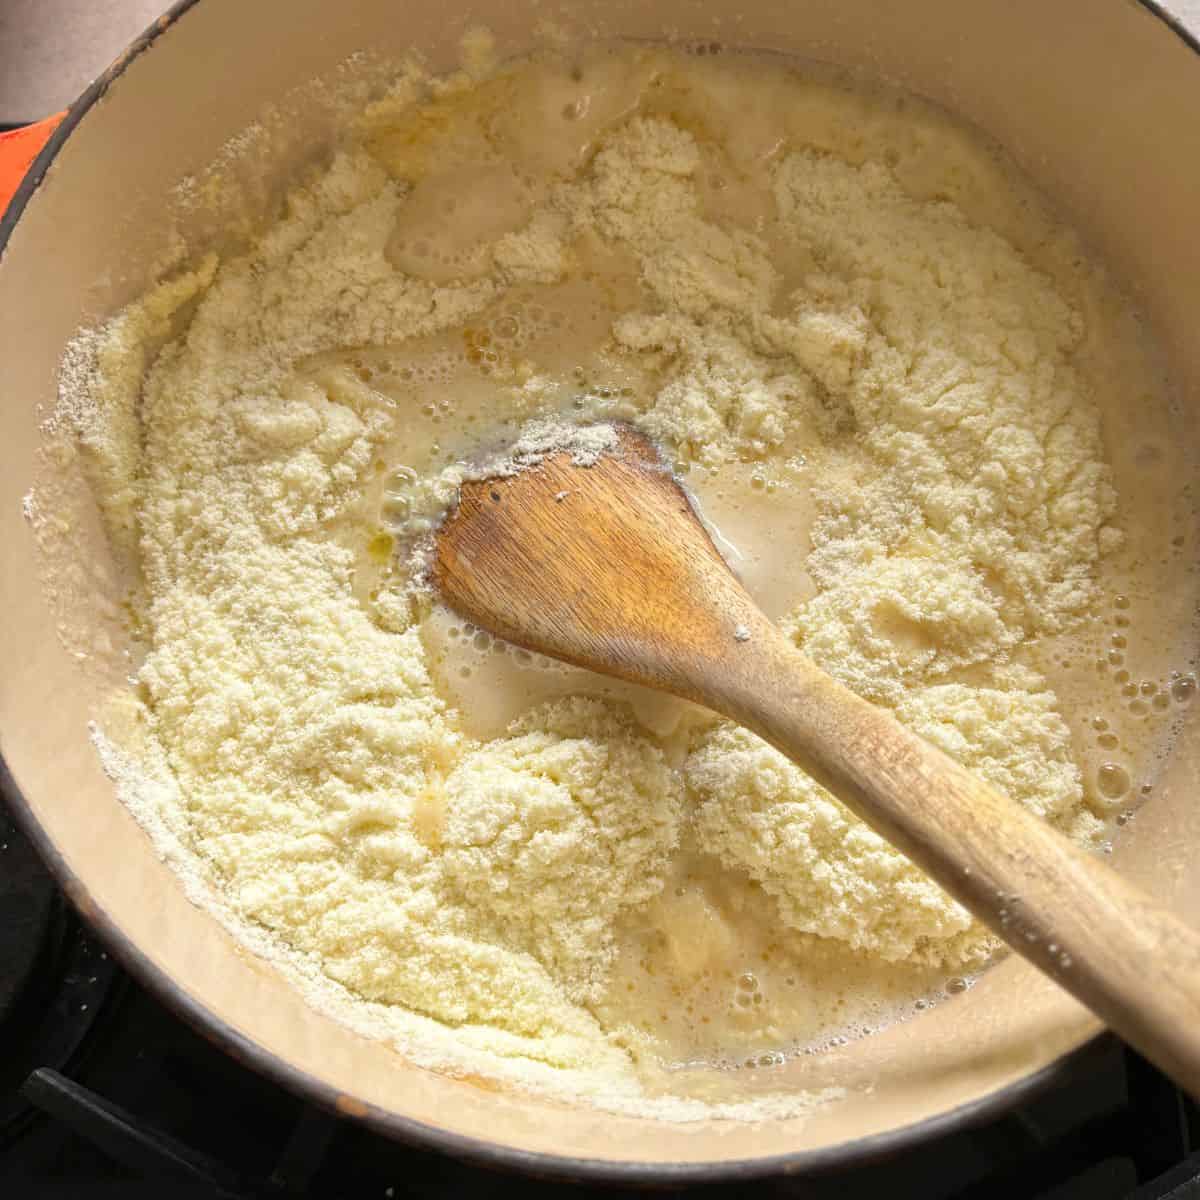 Wooden spoon stirring powdered milk into mixture in pan.